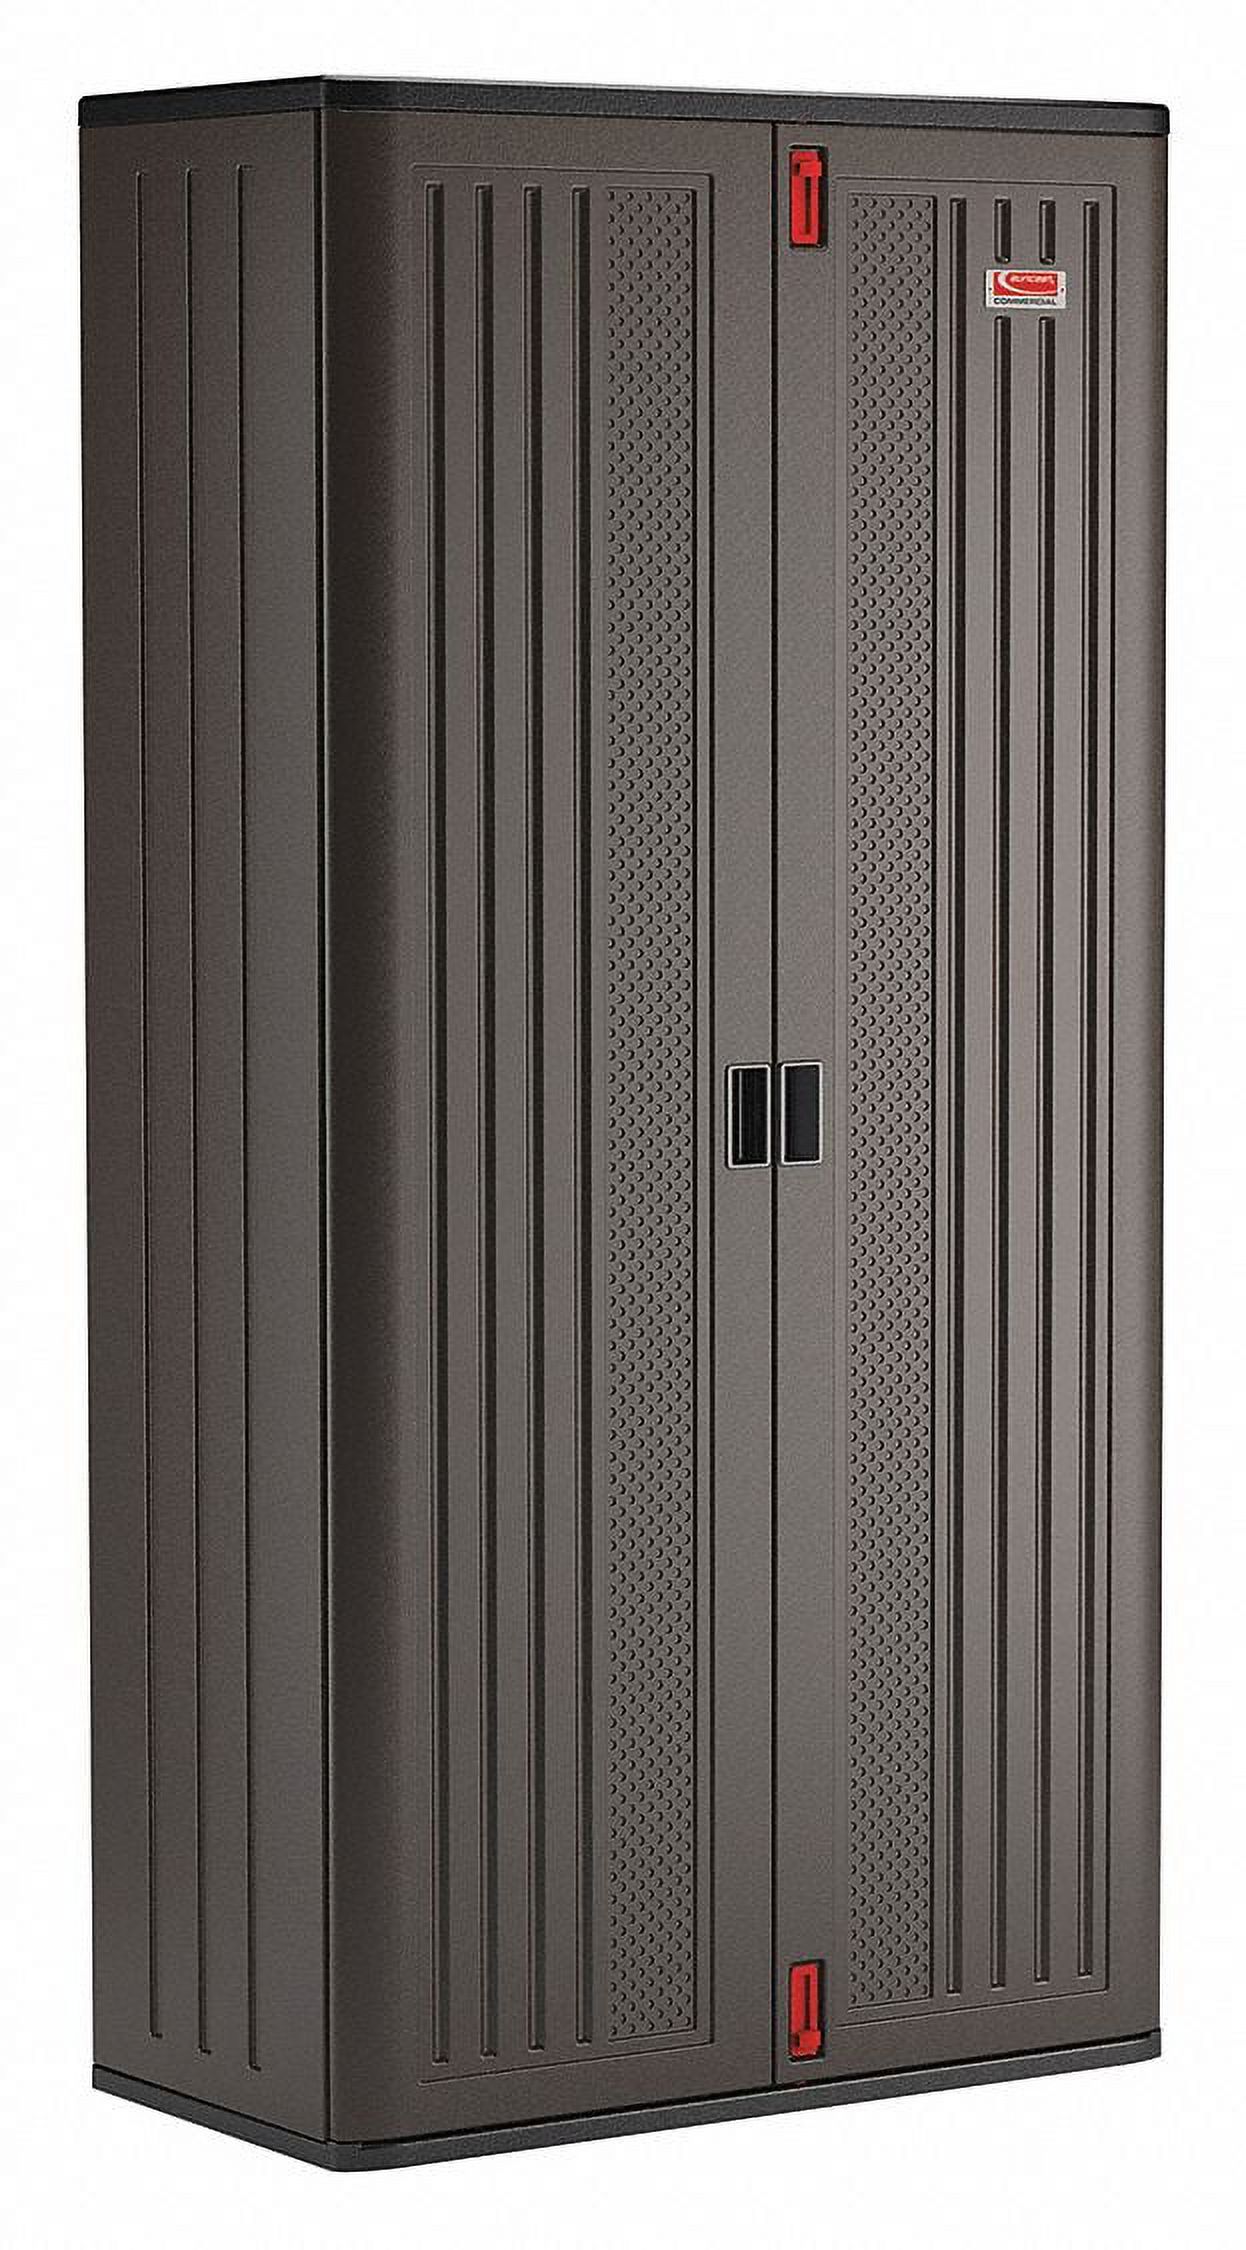 Suncast 80-inch x 40-inch 4-Shelf Storage Cabinet Locker, Black, Resin, Garage Cabinet - image 1 of 3